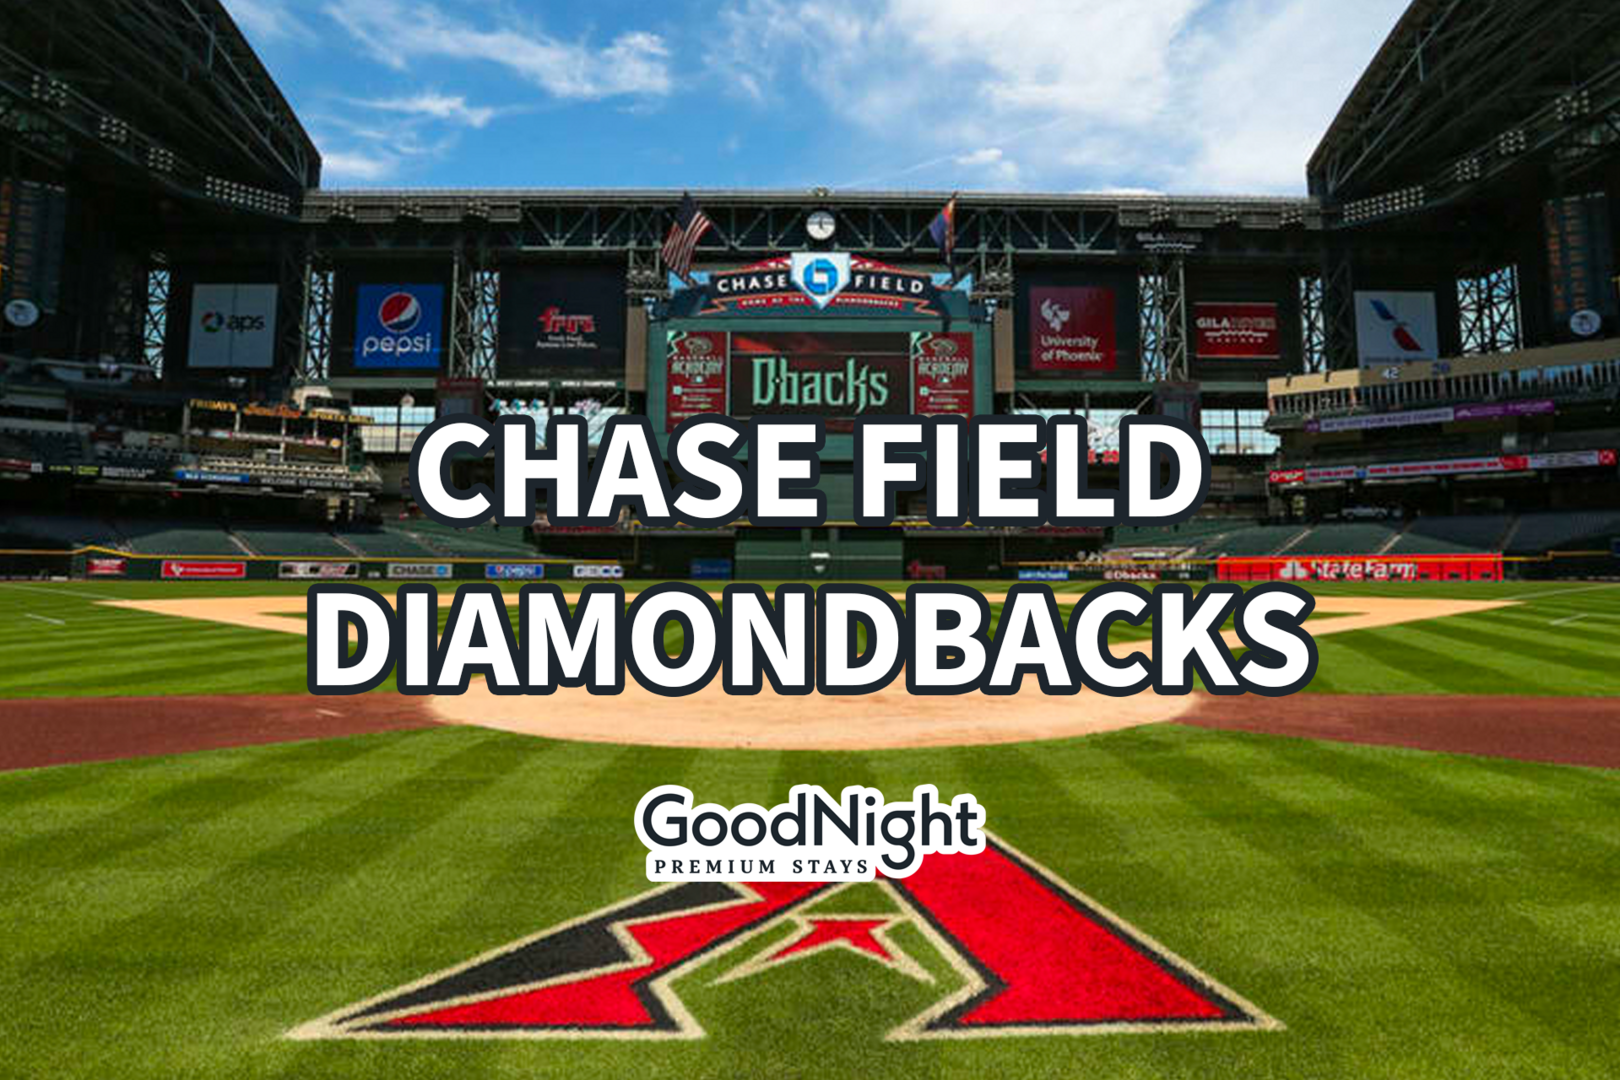 22 mins: Chase Field - Home to the AZ Diamondbacks